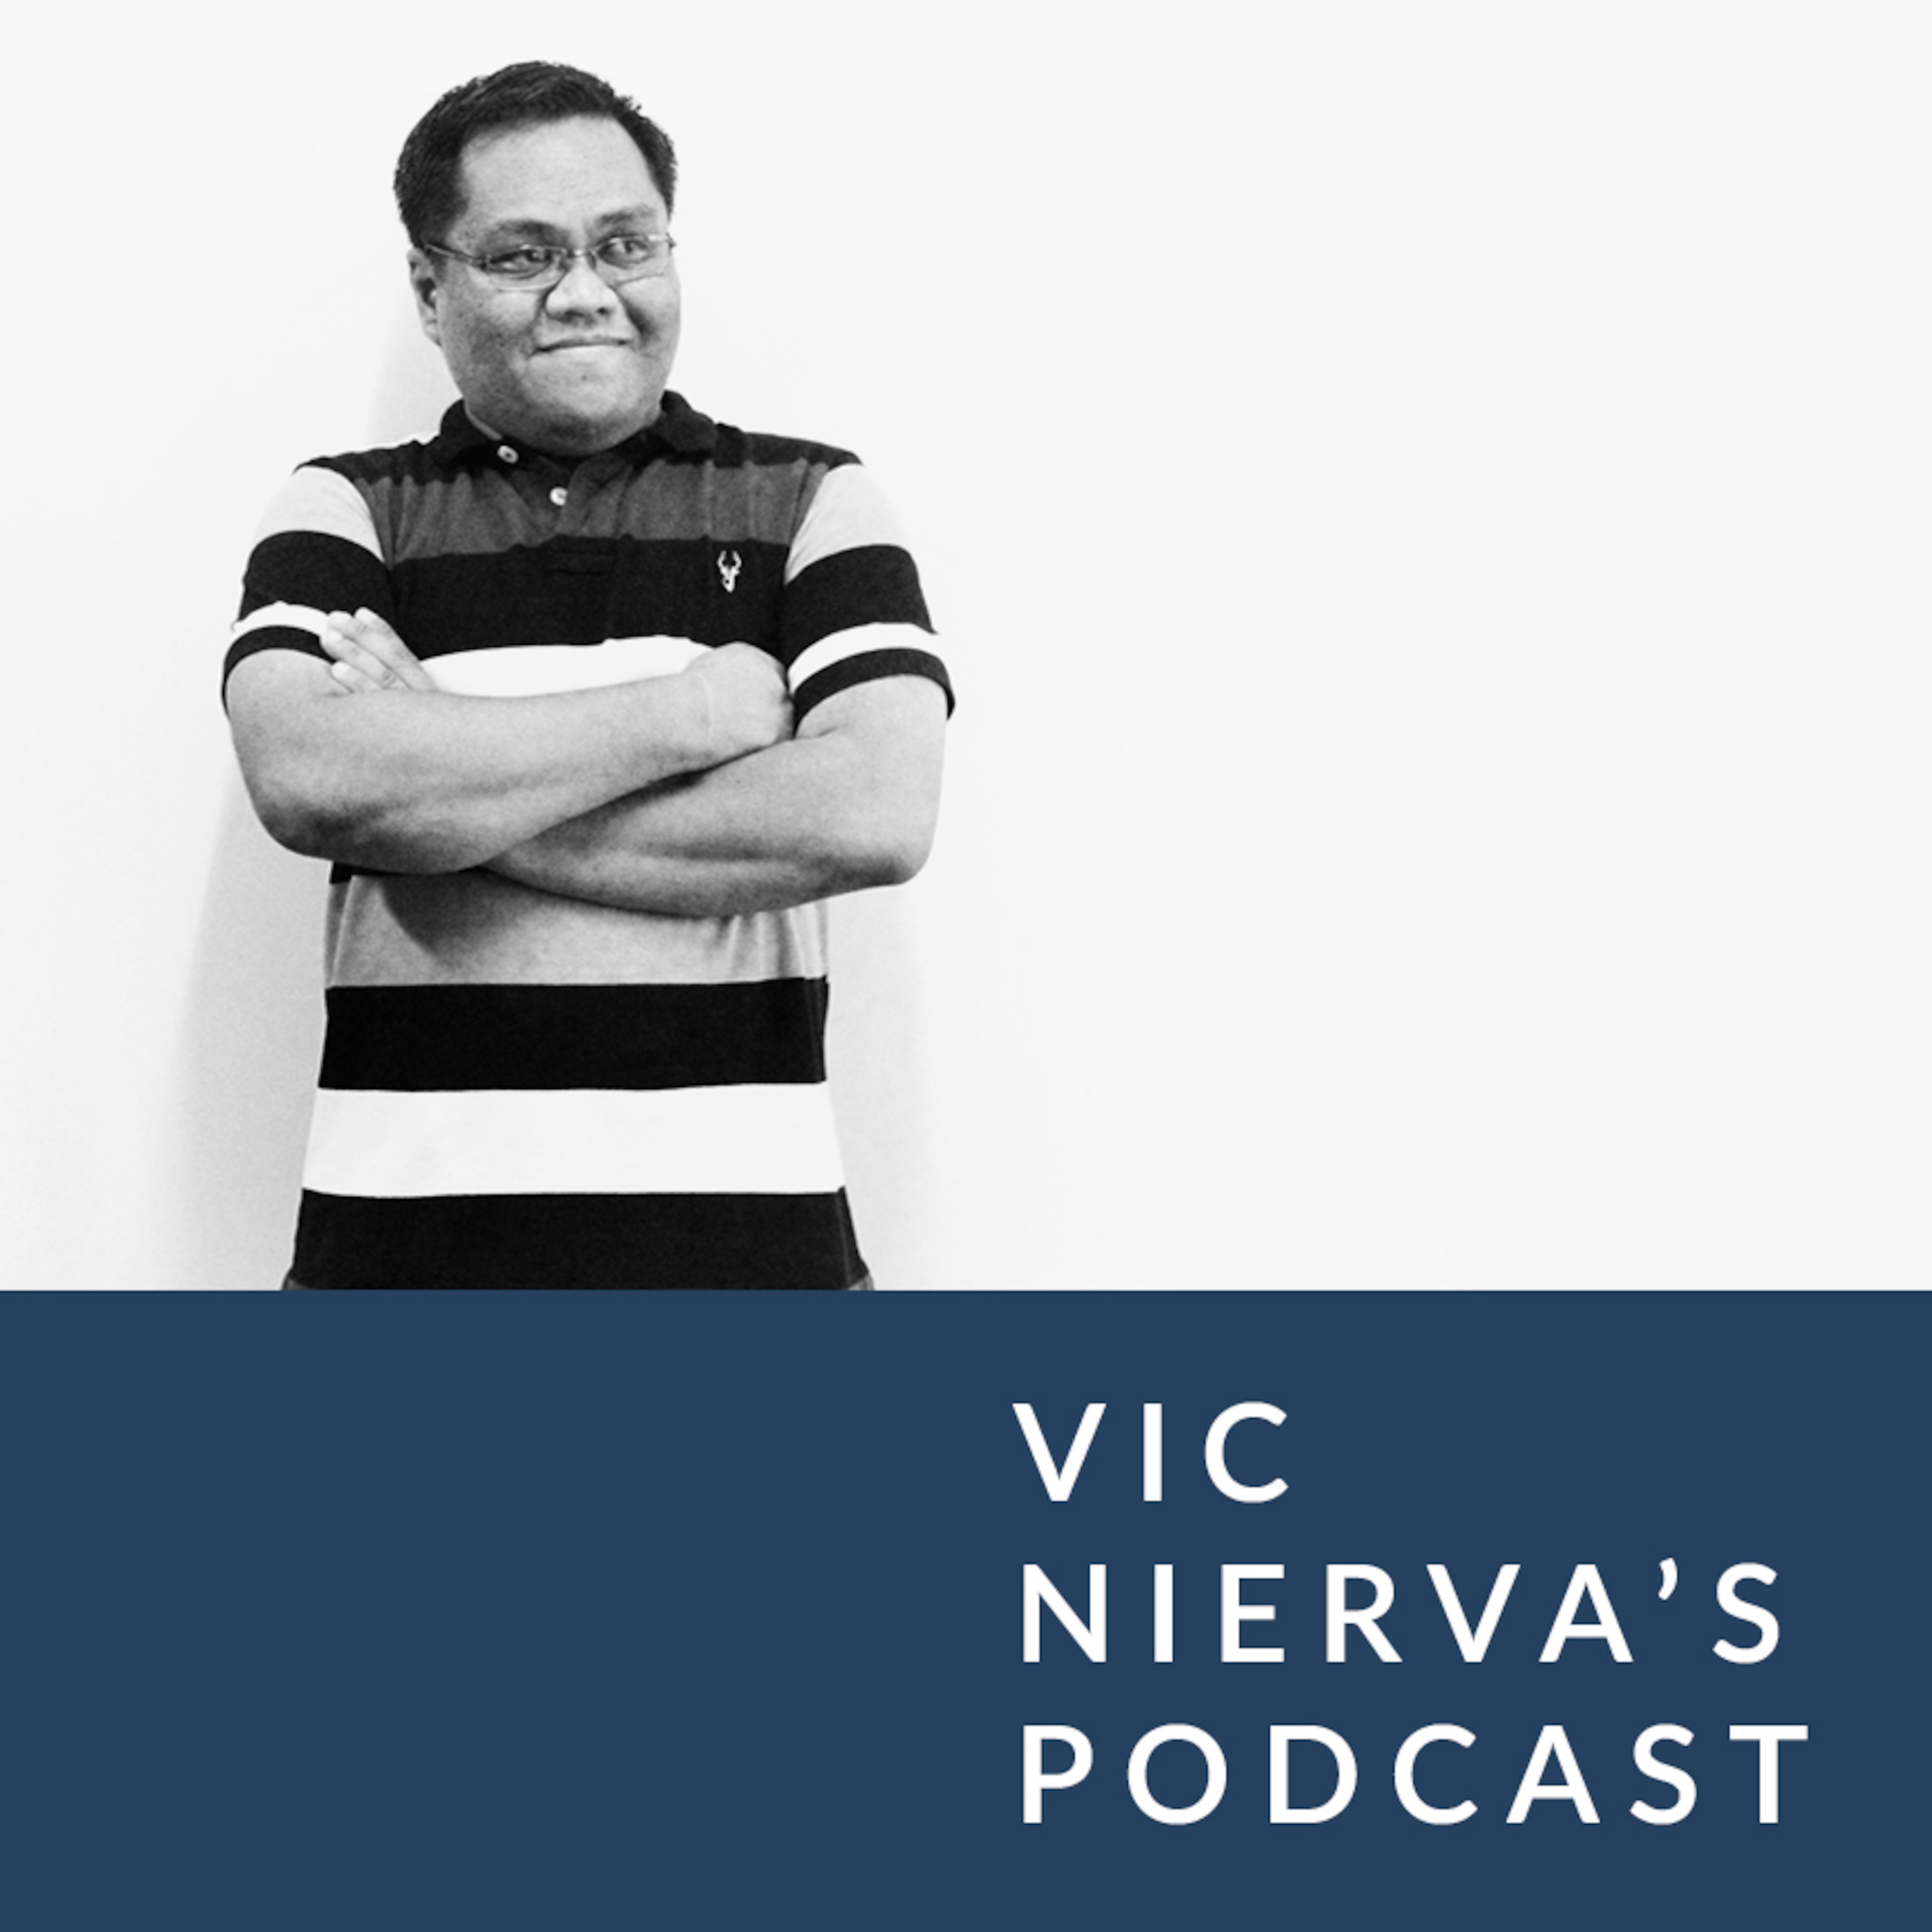 Vic Nierva's Podcast